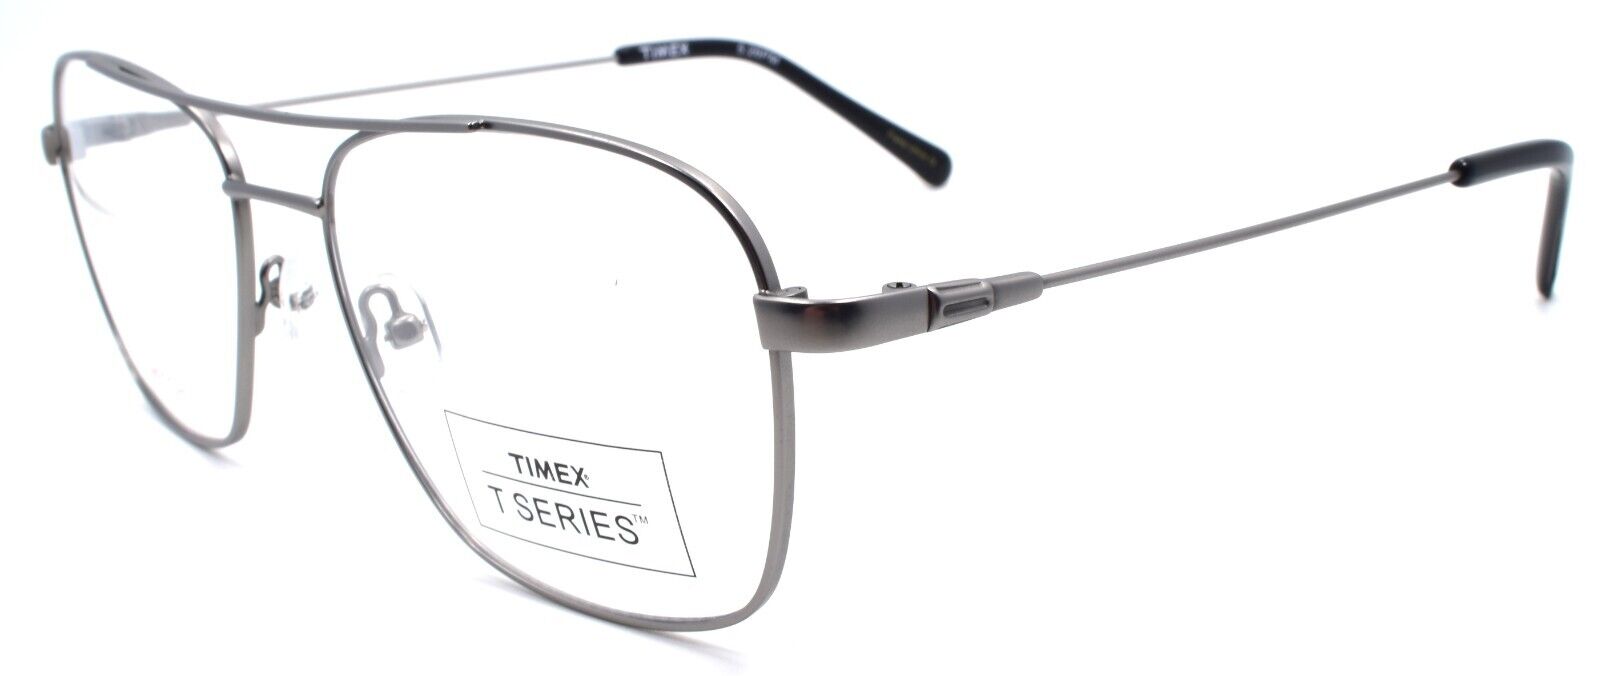 1-Timex 5:26 PM Men's Eyeglasses Frames Aviator LARGE 59-17-155 Gunmetal-715317198103-IKSpecs